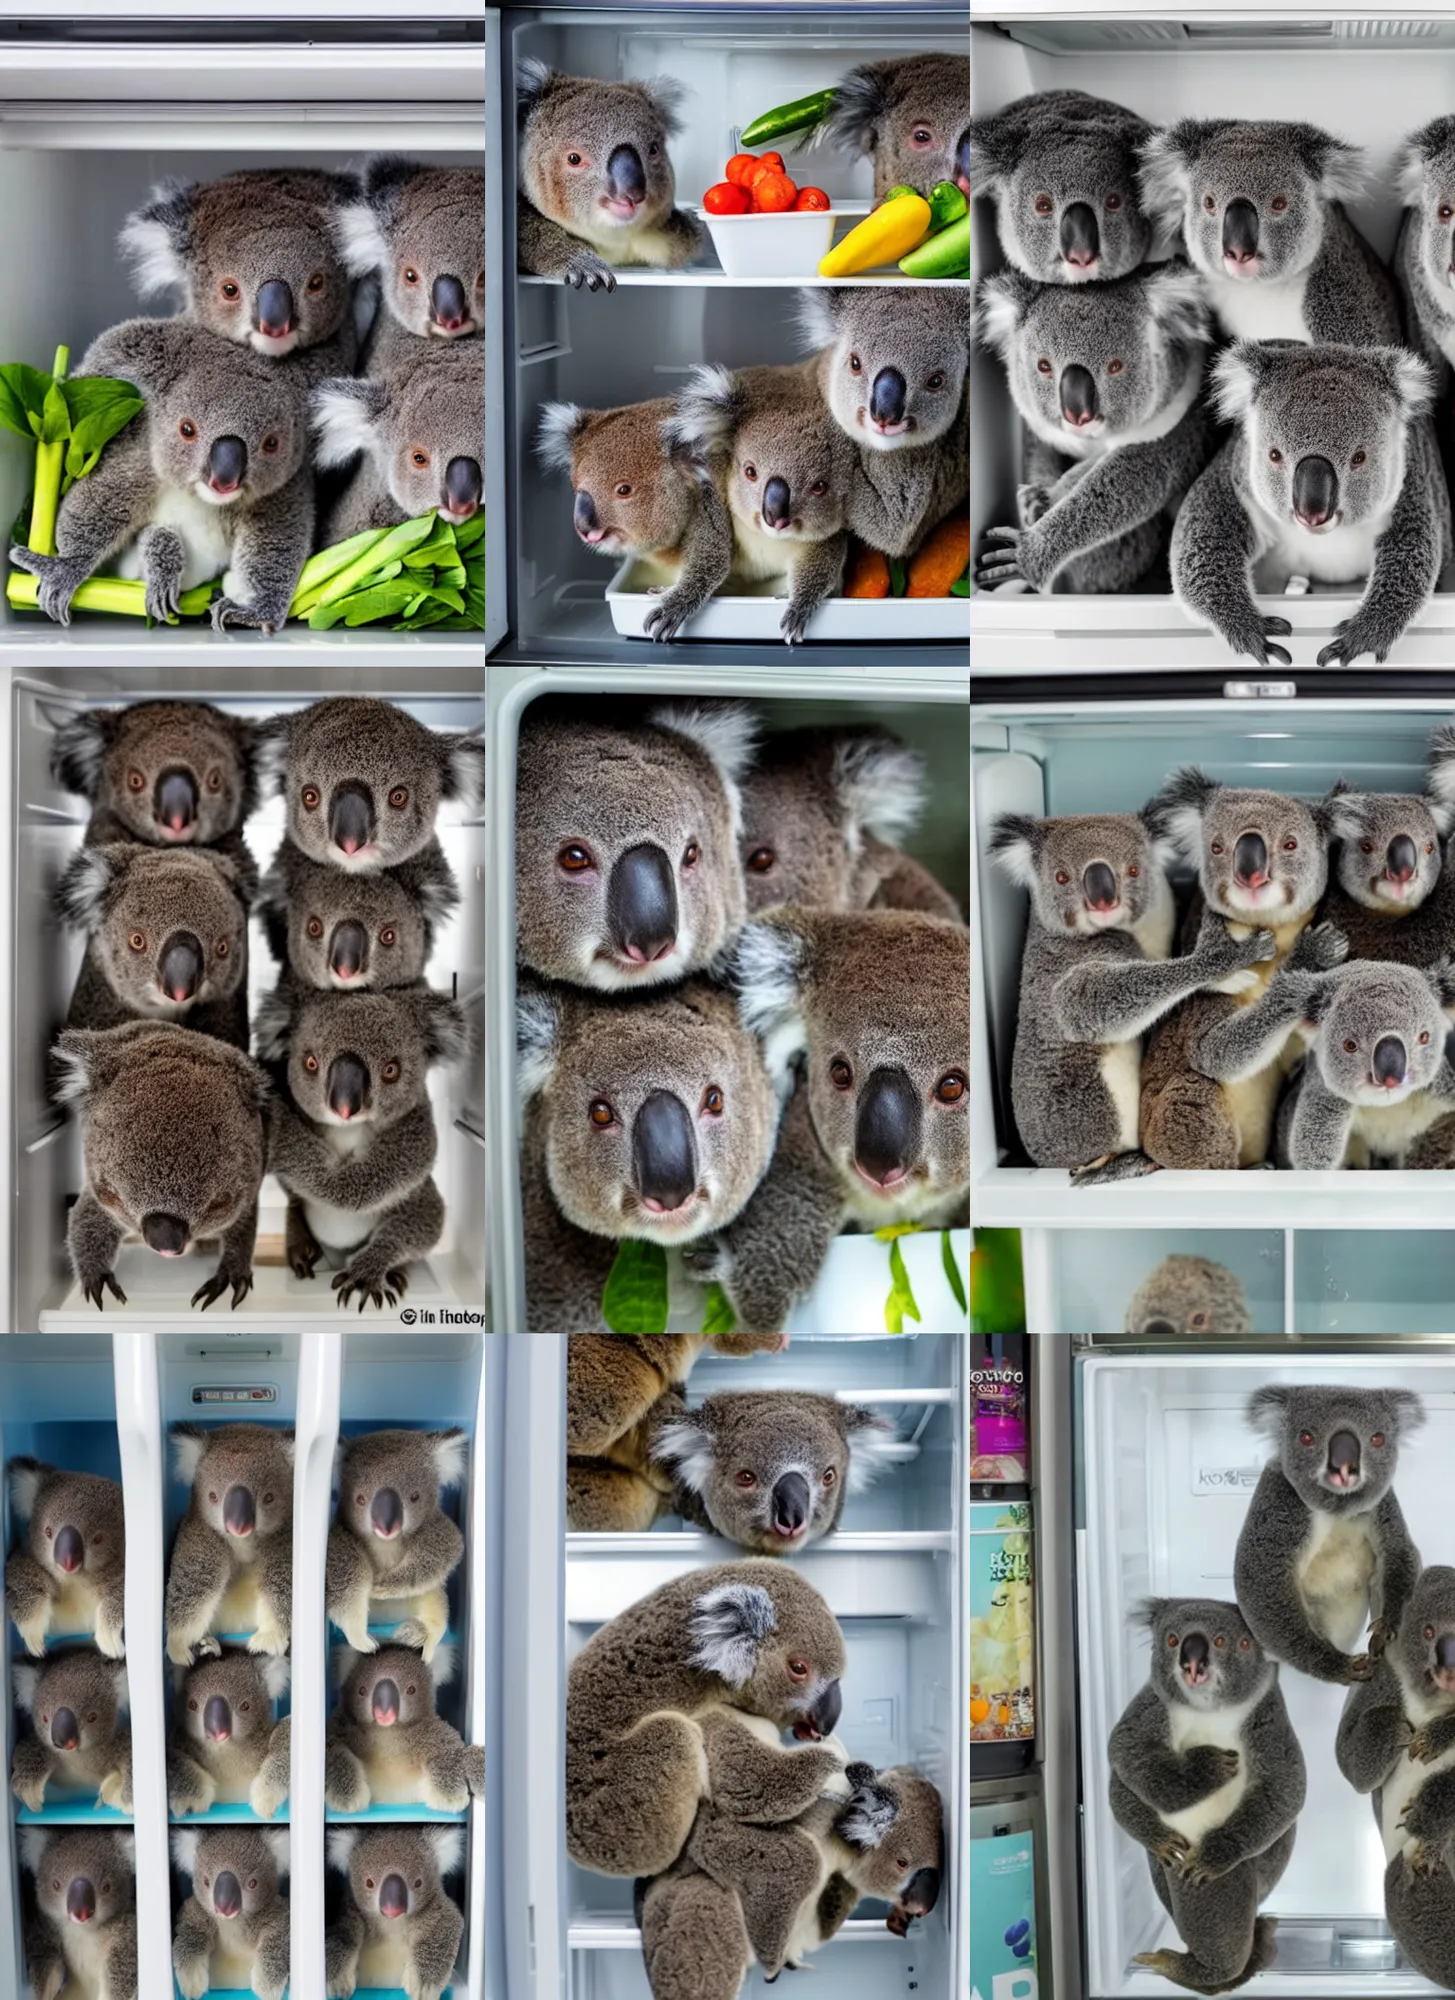 Prompt: five koalas in a refrigerator, photo.